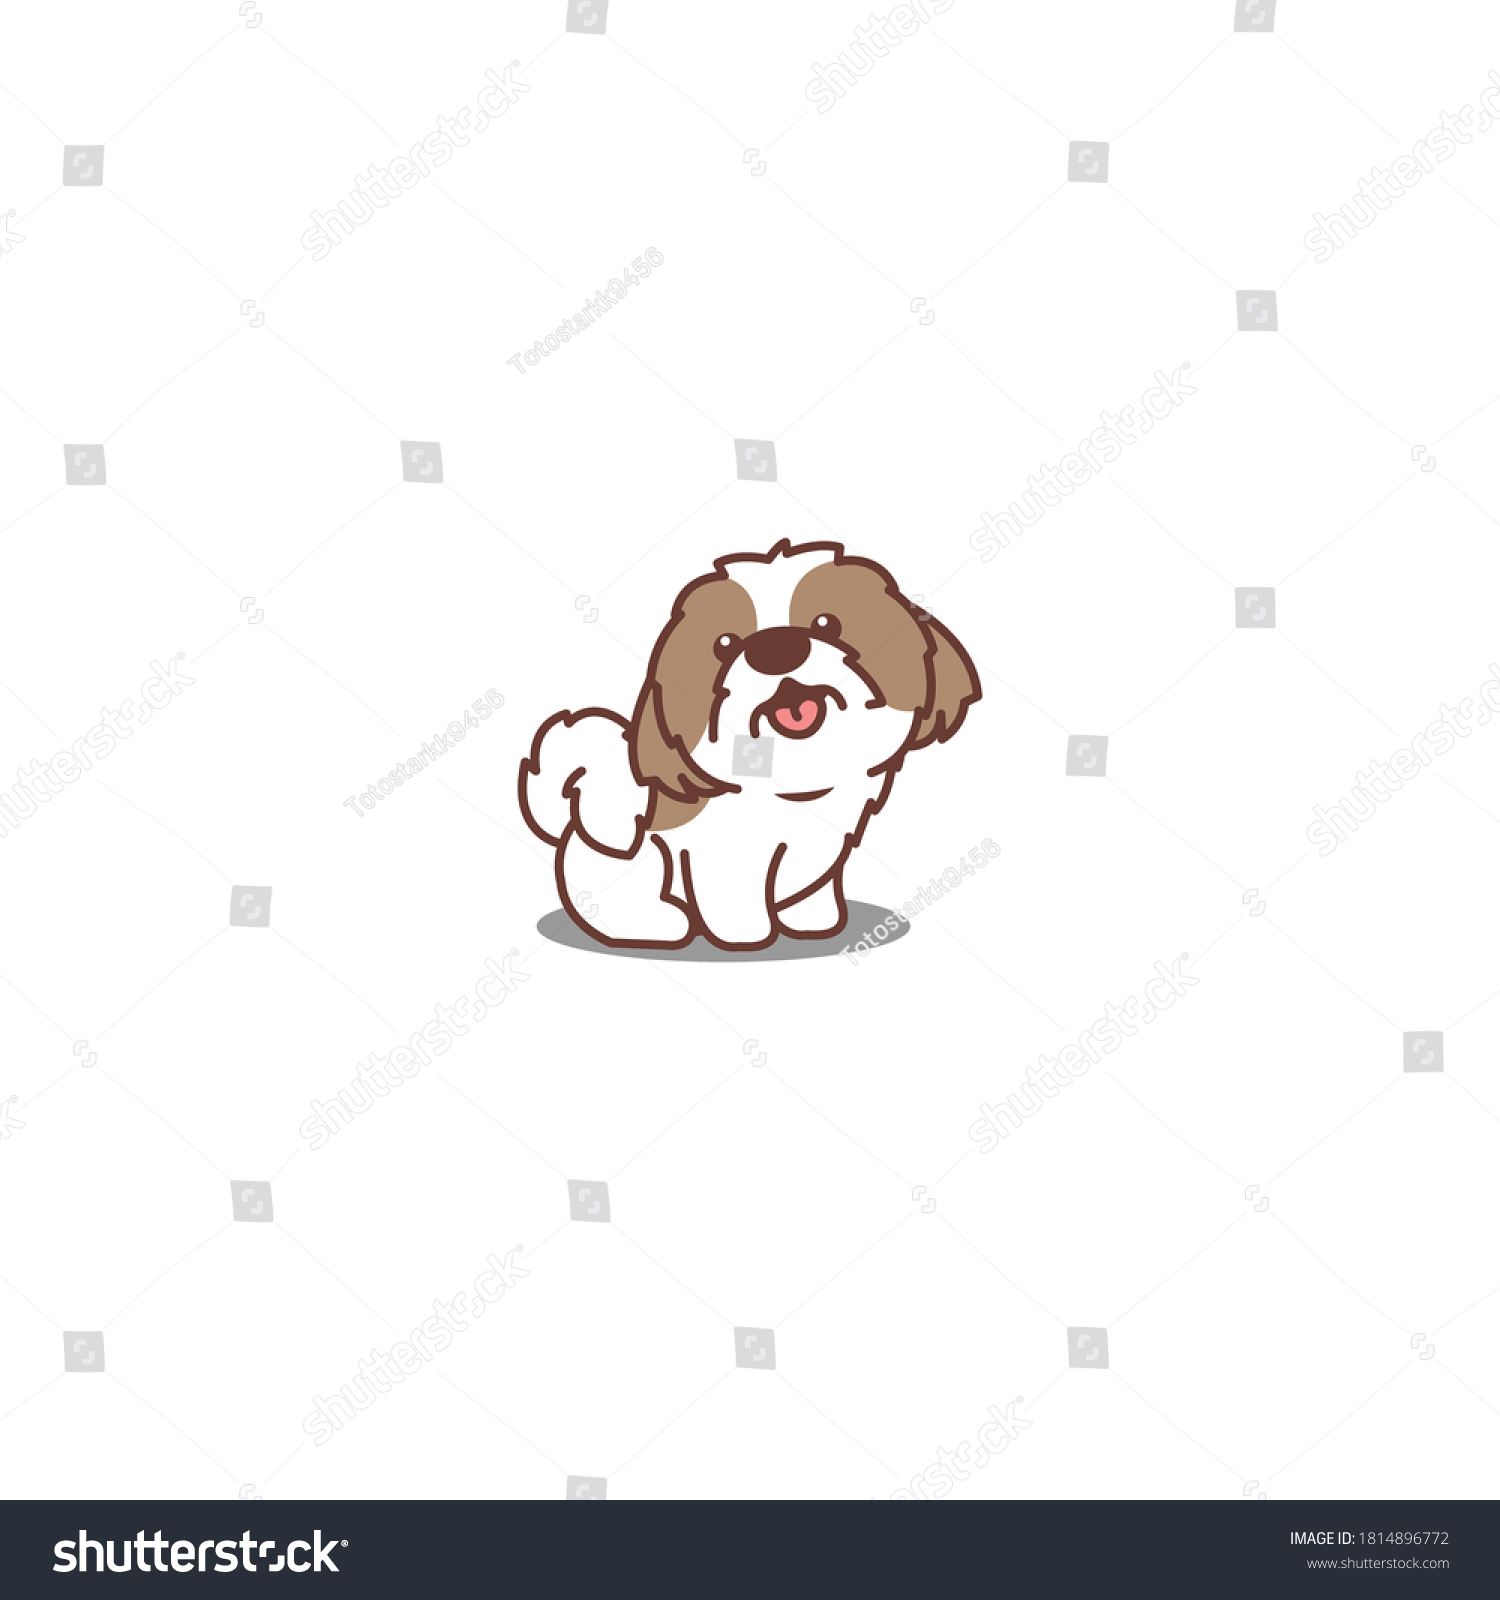 SVG of Cute shih tzu dog sitting and smiling cartoon icon, vector illustration svg